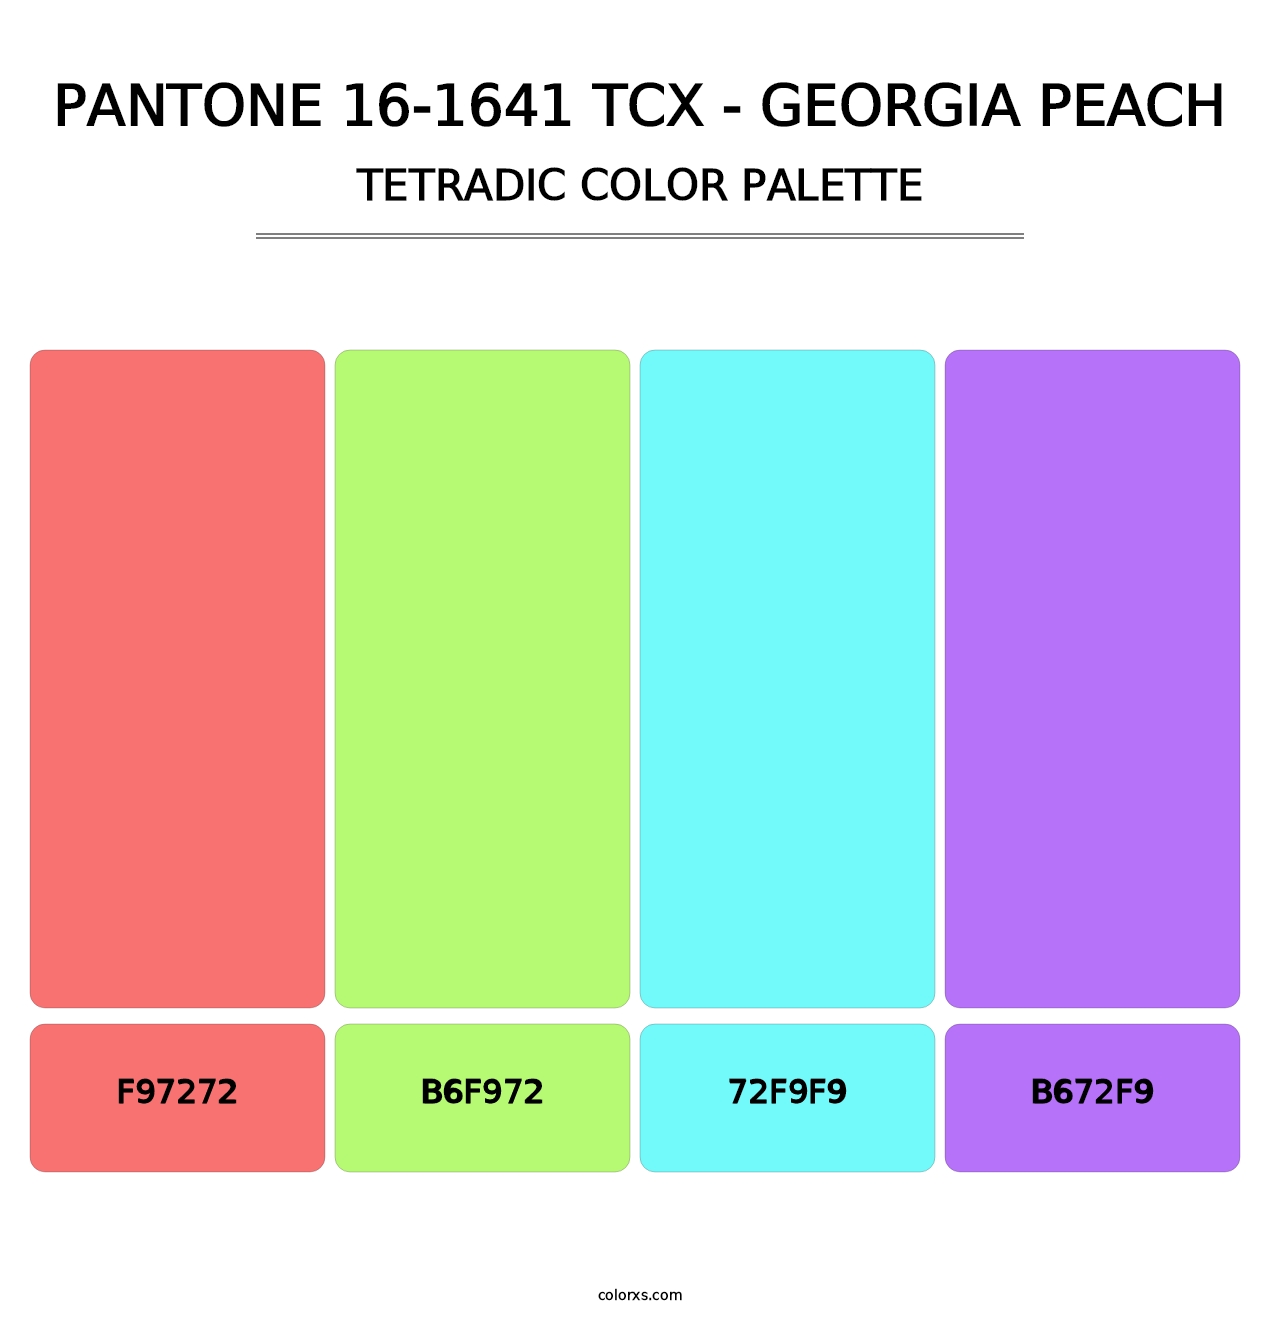 PANTONE 16-1641 TCX - Georgia Peach - Tetradic Color Palette